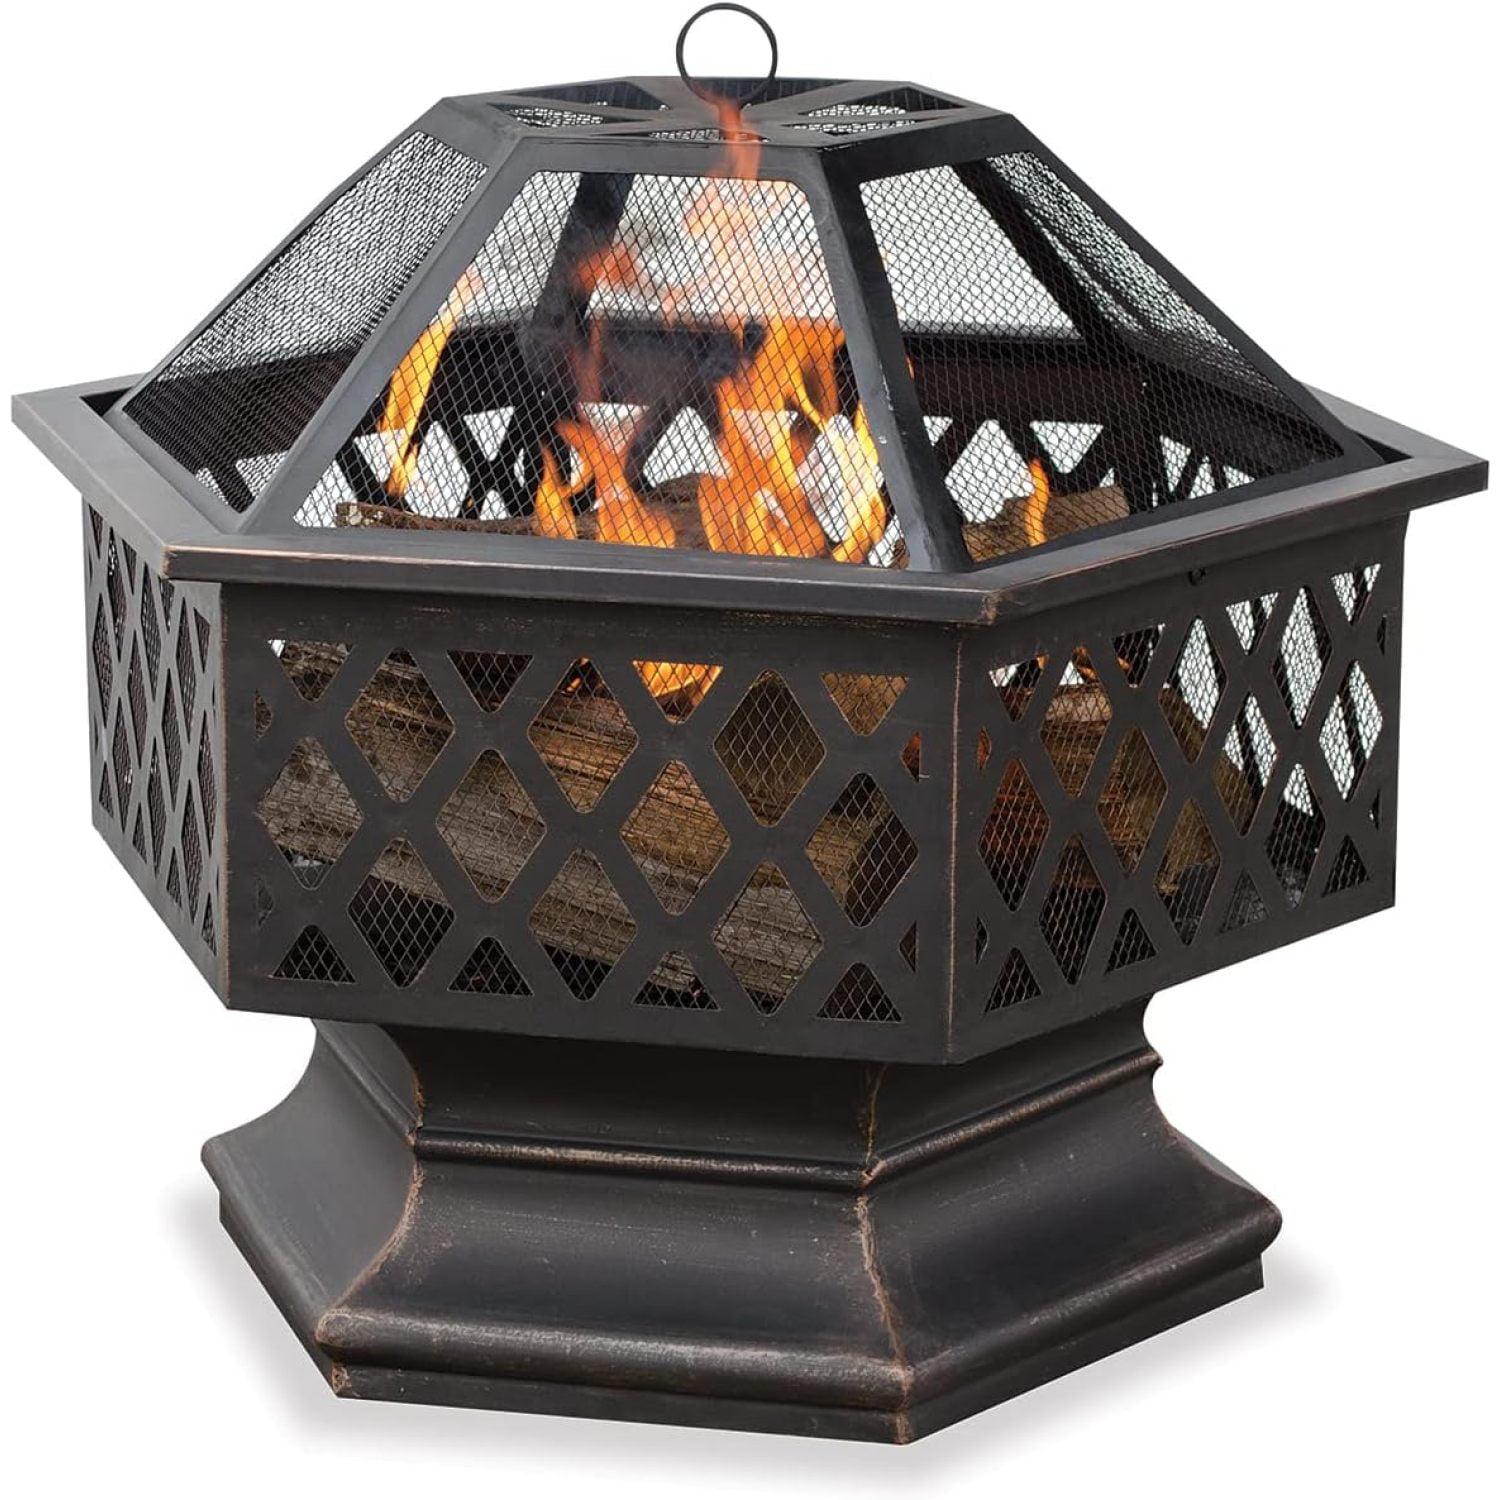 Hexagon Bronze Wood-Burning Outdoor Fire Pit with Lattice Design